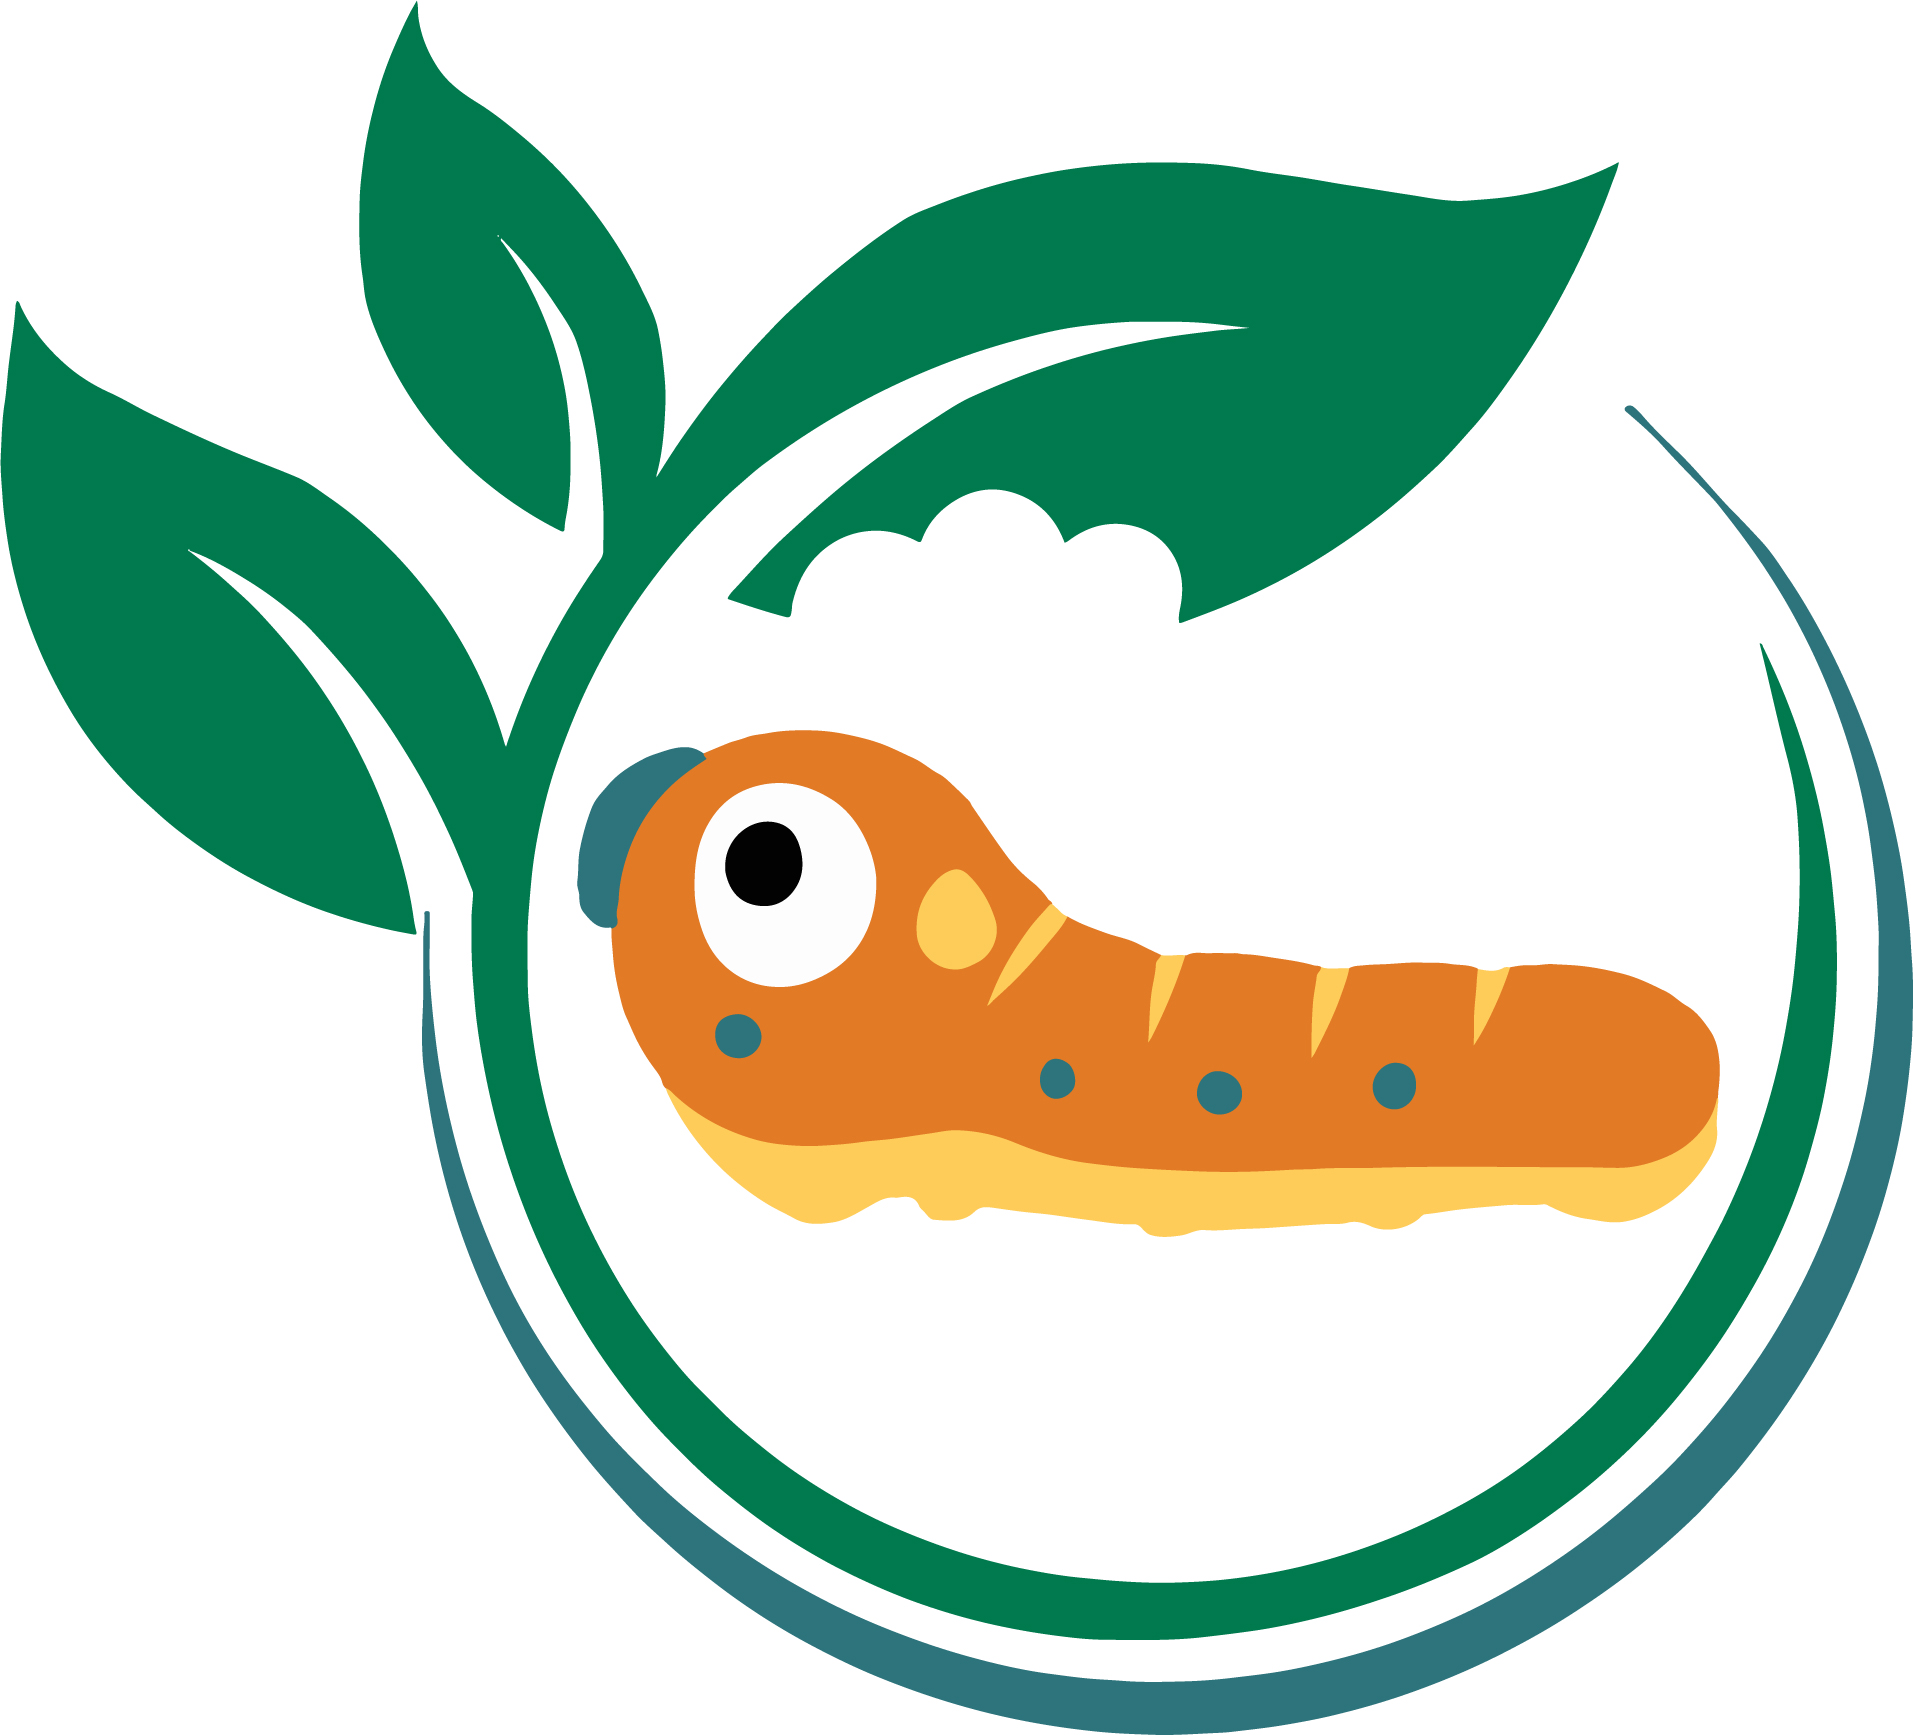 Upload Nursery Logo